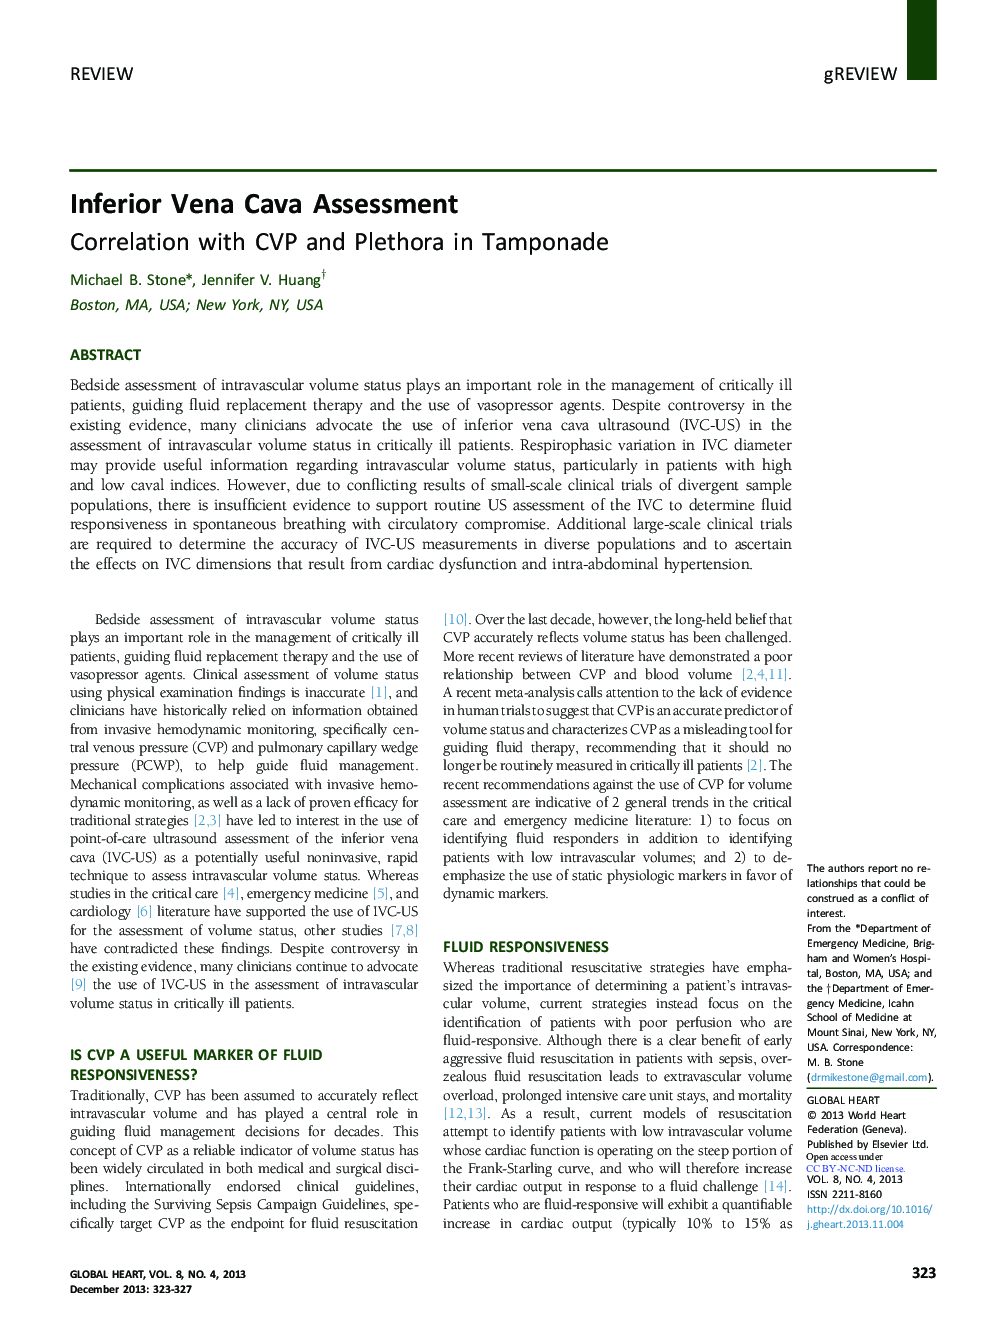 Inferior Vena Cava Assessment: Correlation with CVP and Plethora in Tamponade